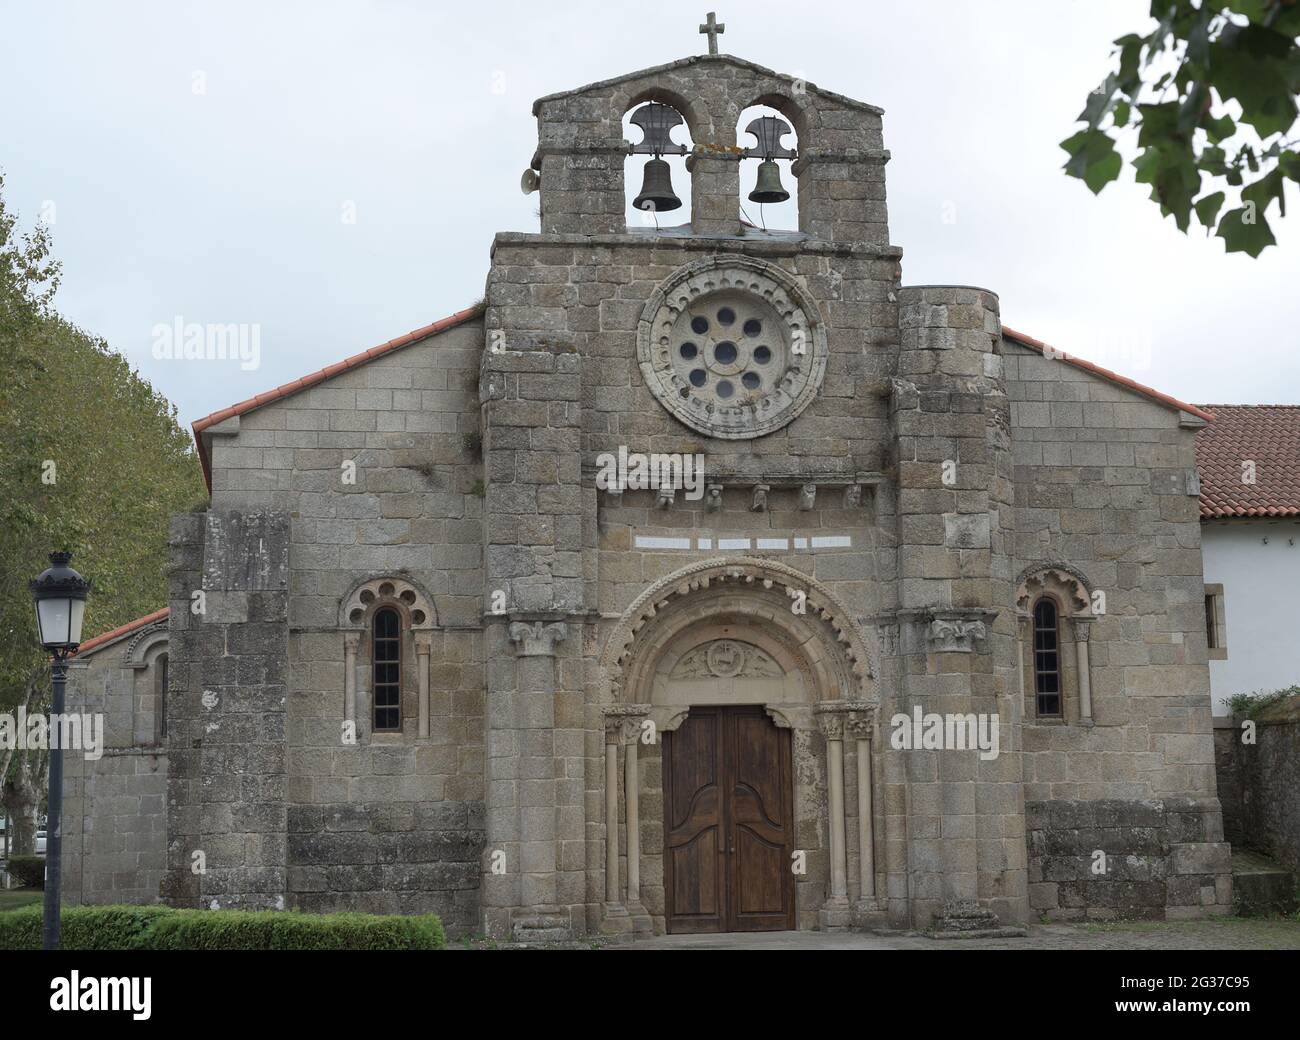 Spain, Galicia, La Coruña province, Cambre. Church of Santa Maria. Built in the 12th century in Romanesque style. View of the main facade. Stock Photo